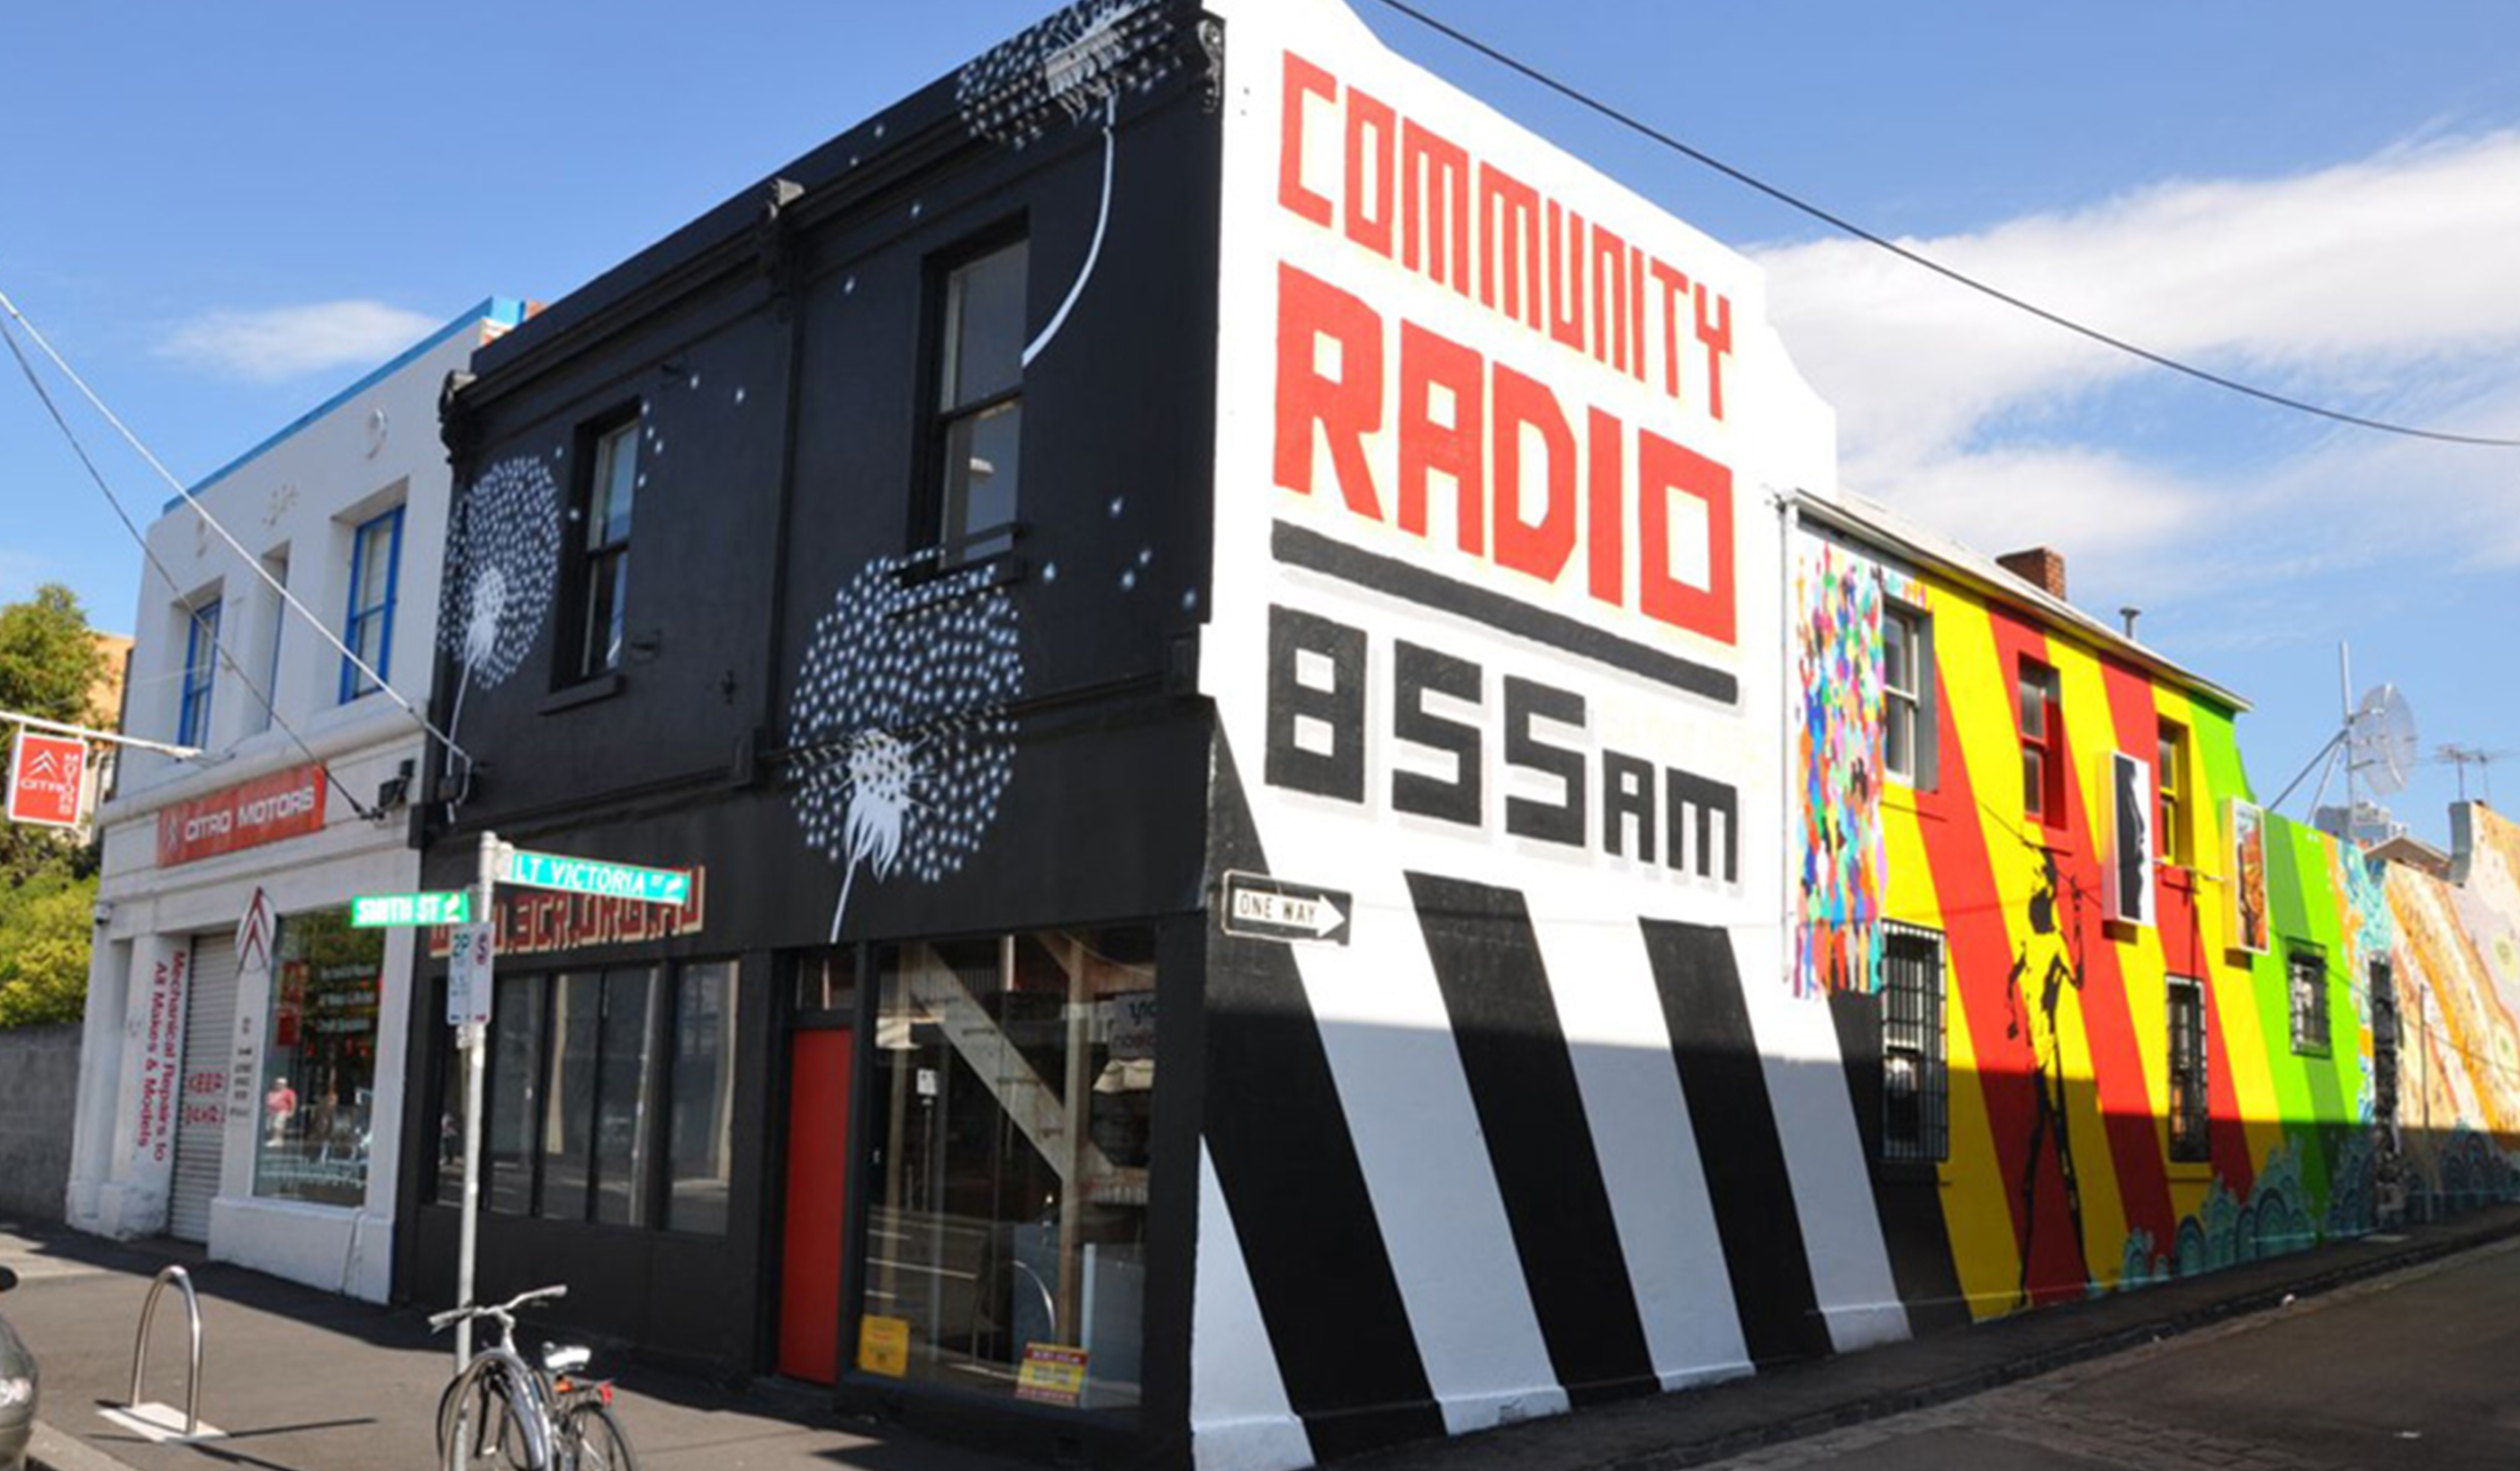 Community radio listenership at record high in Australia